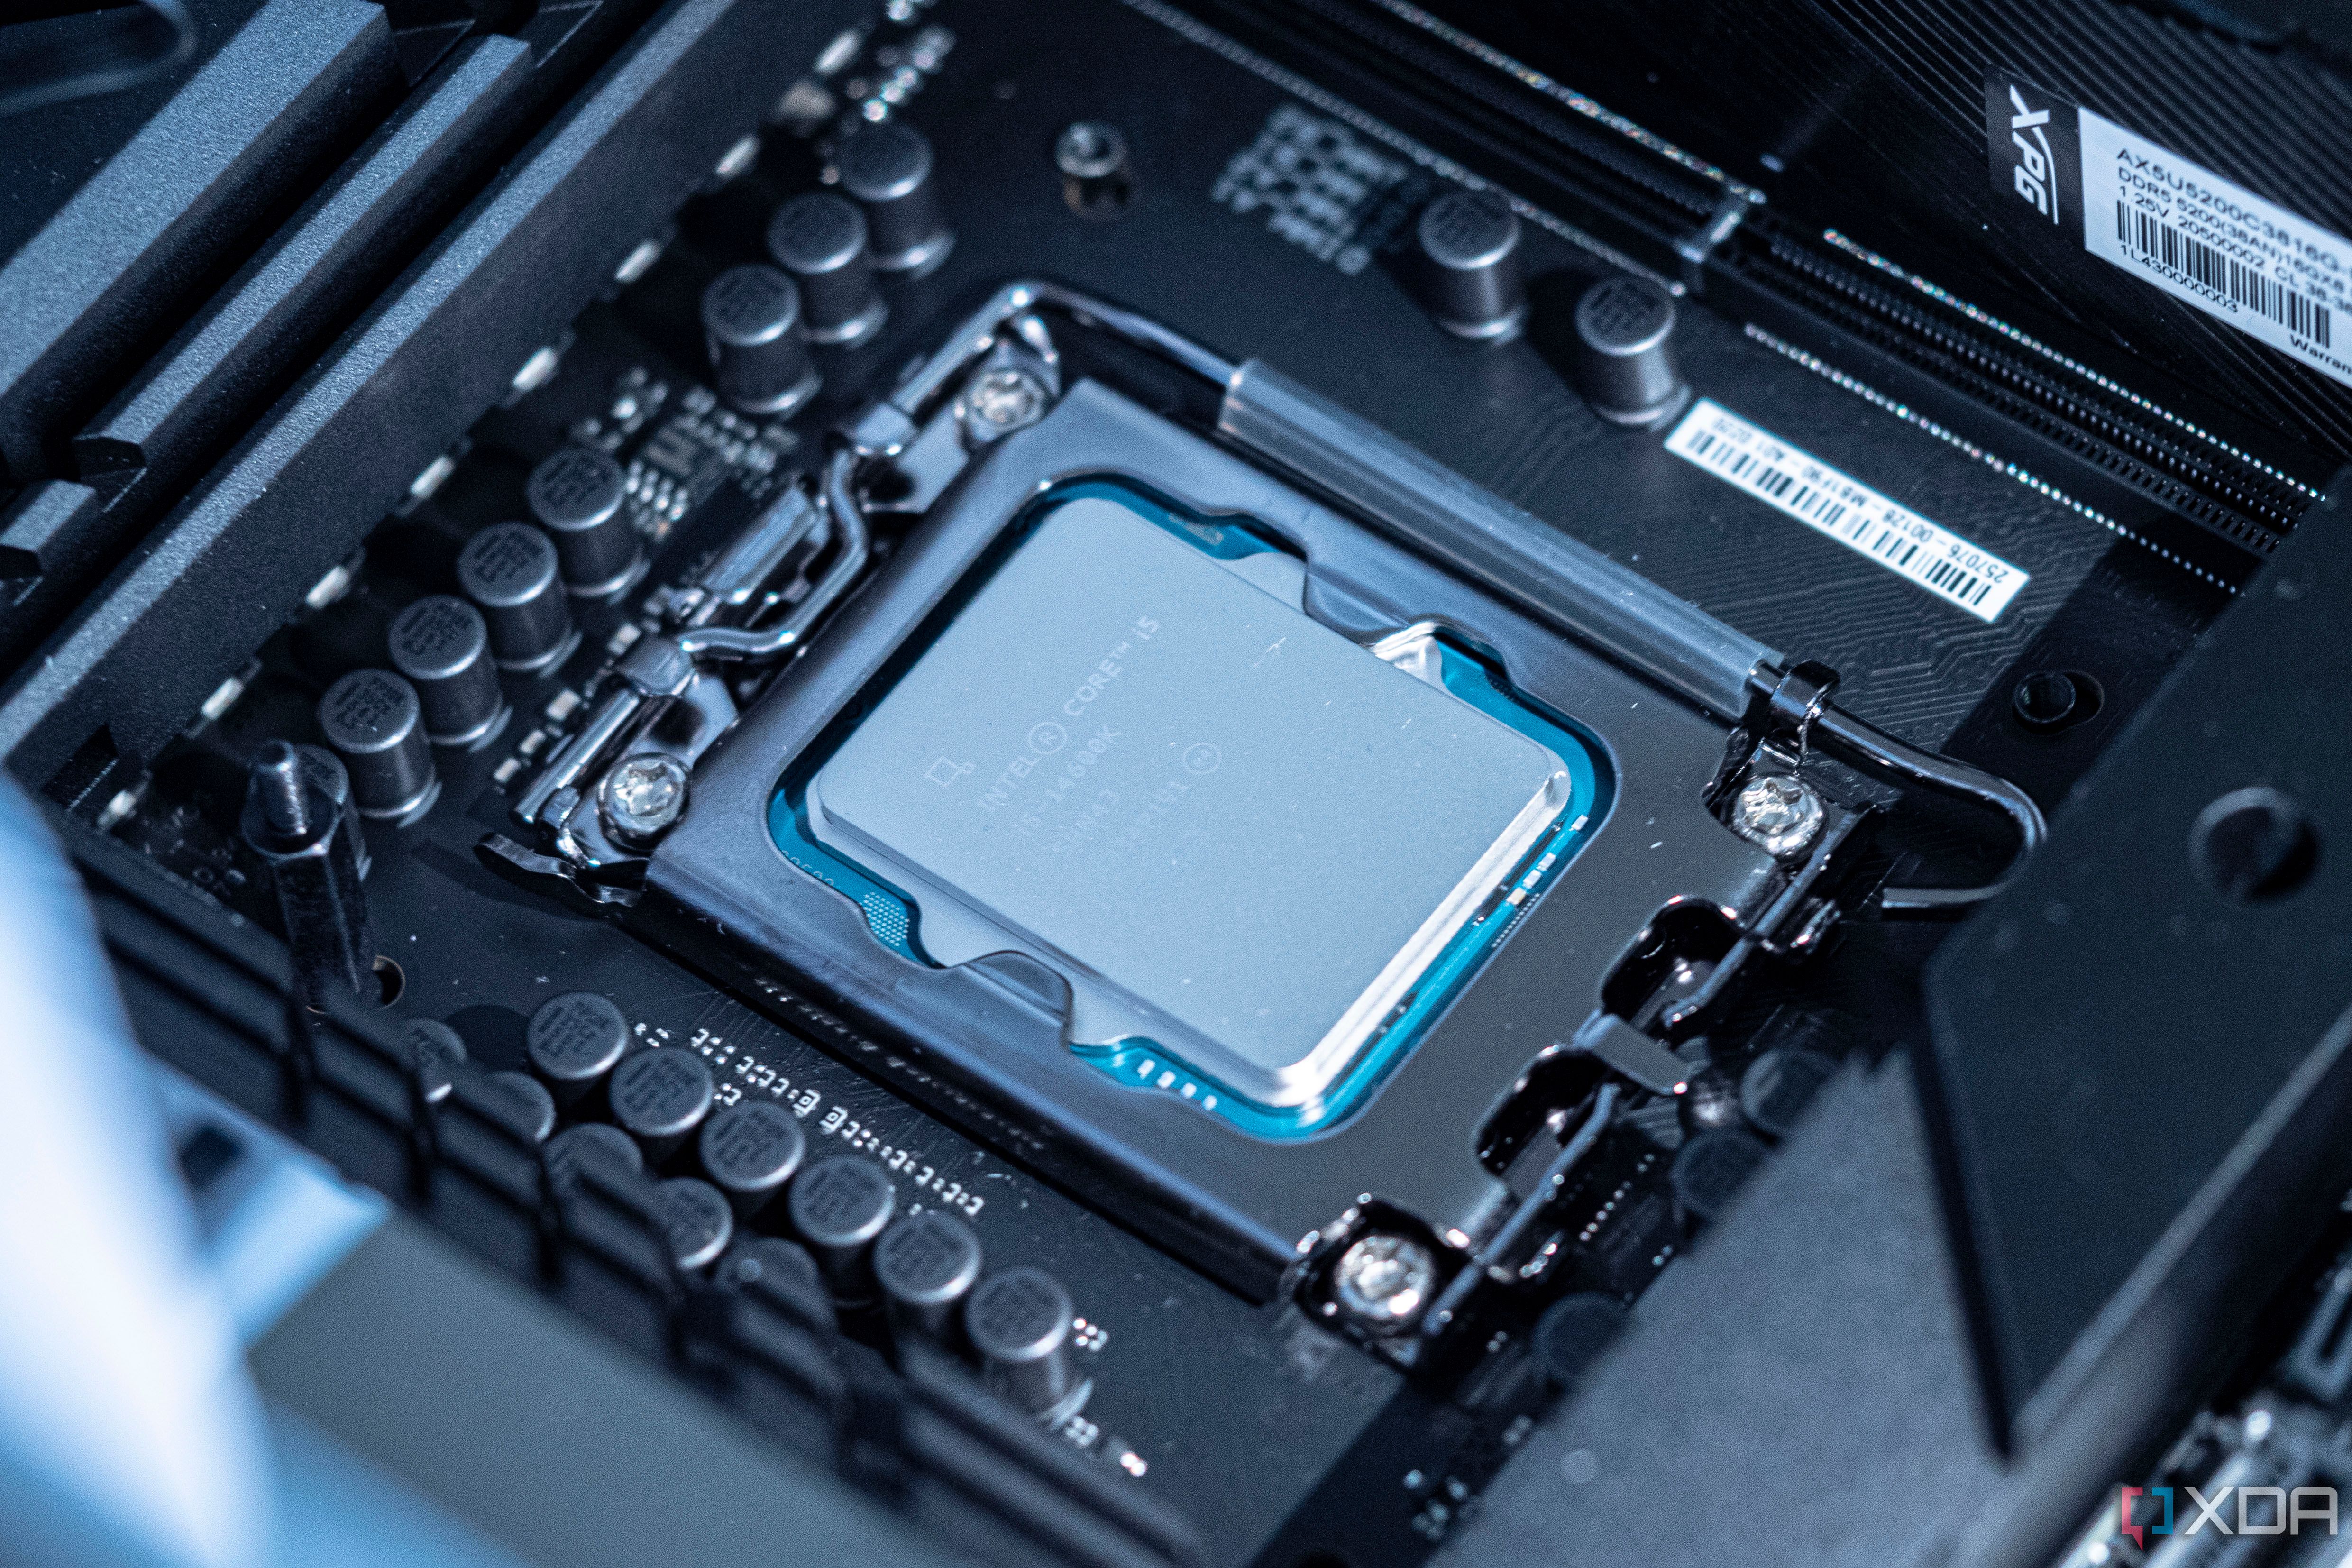 Intel i5-14600K in CPU socket of a motherboard